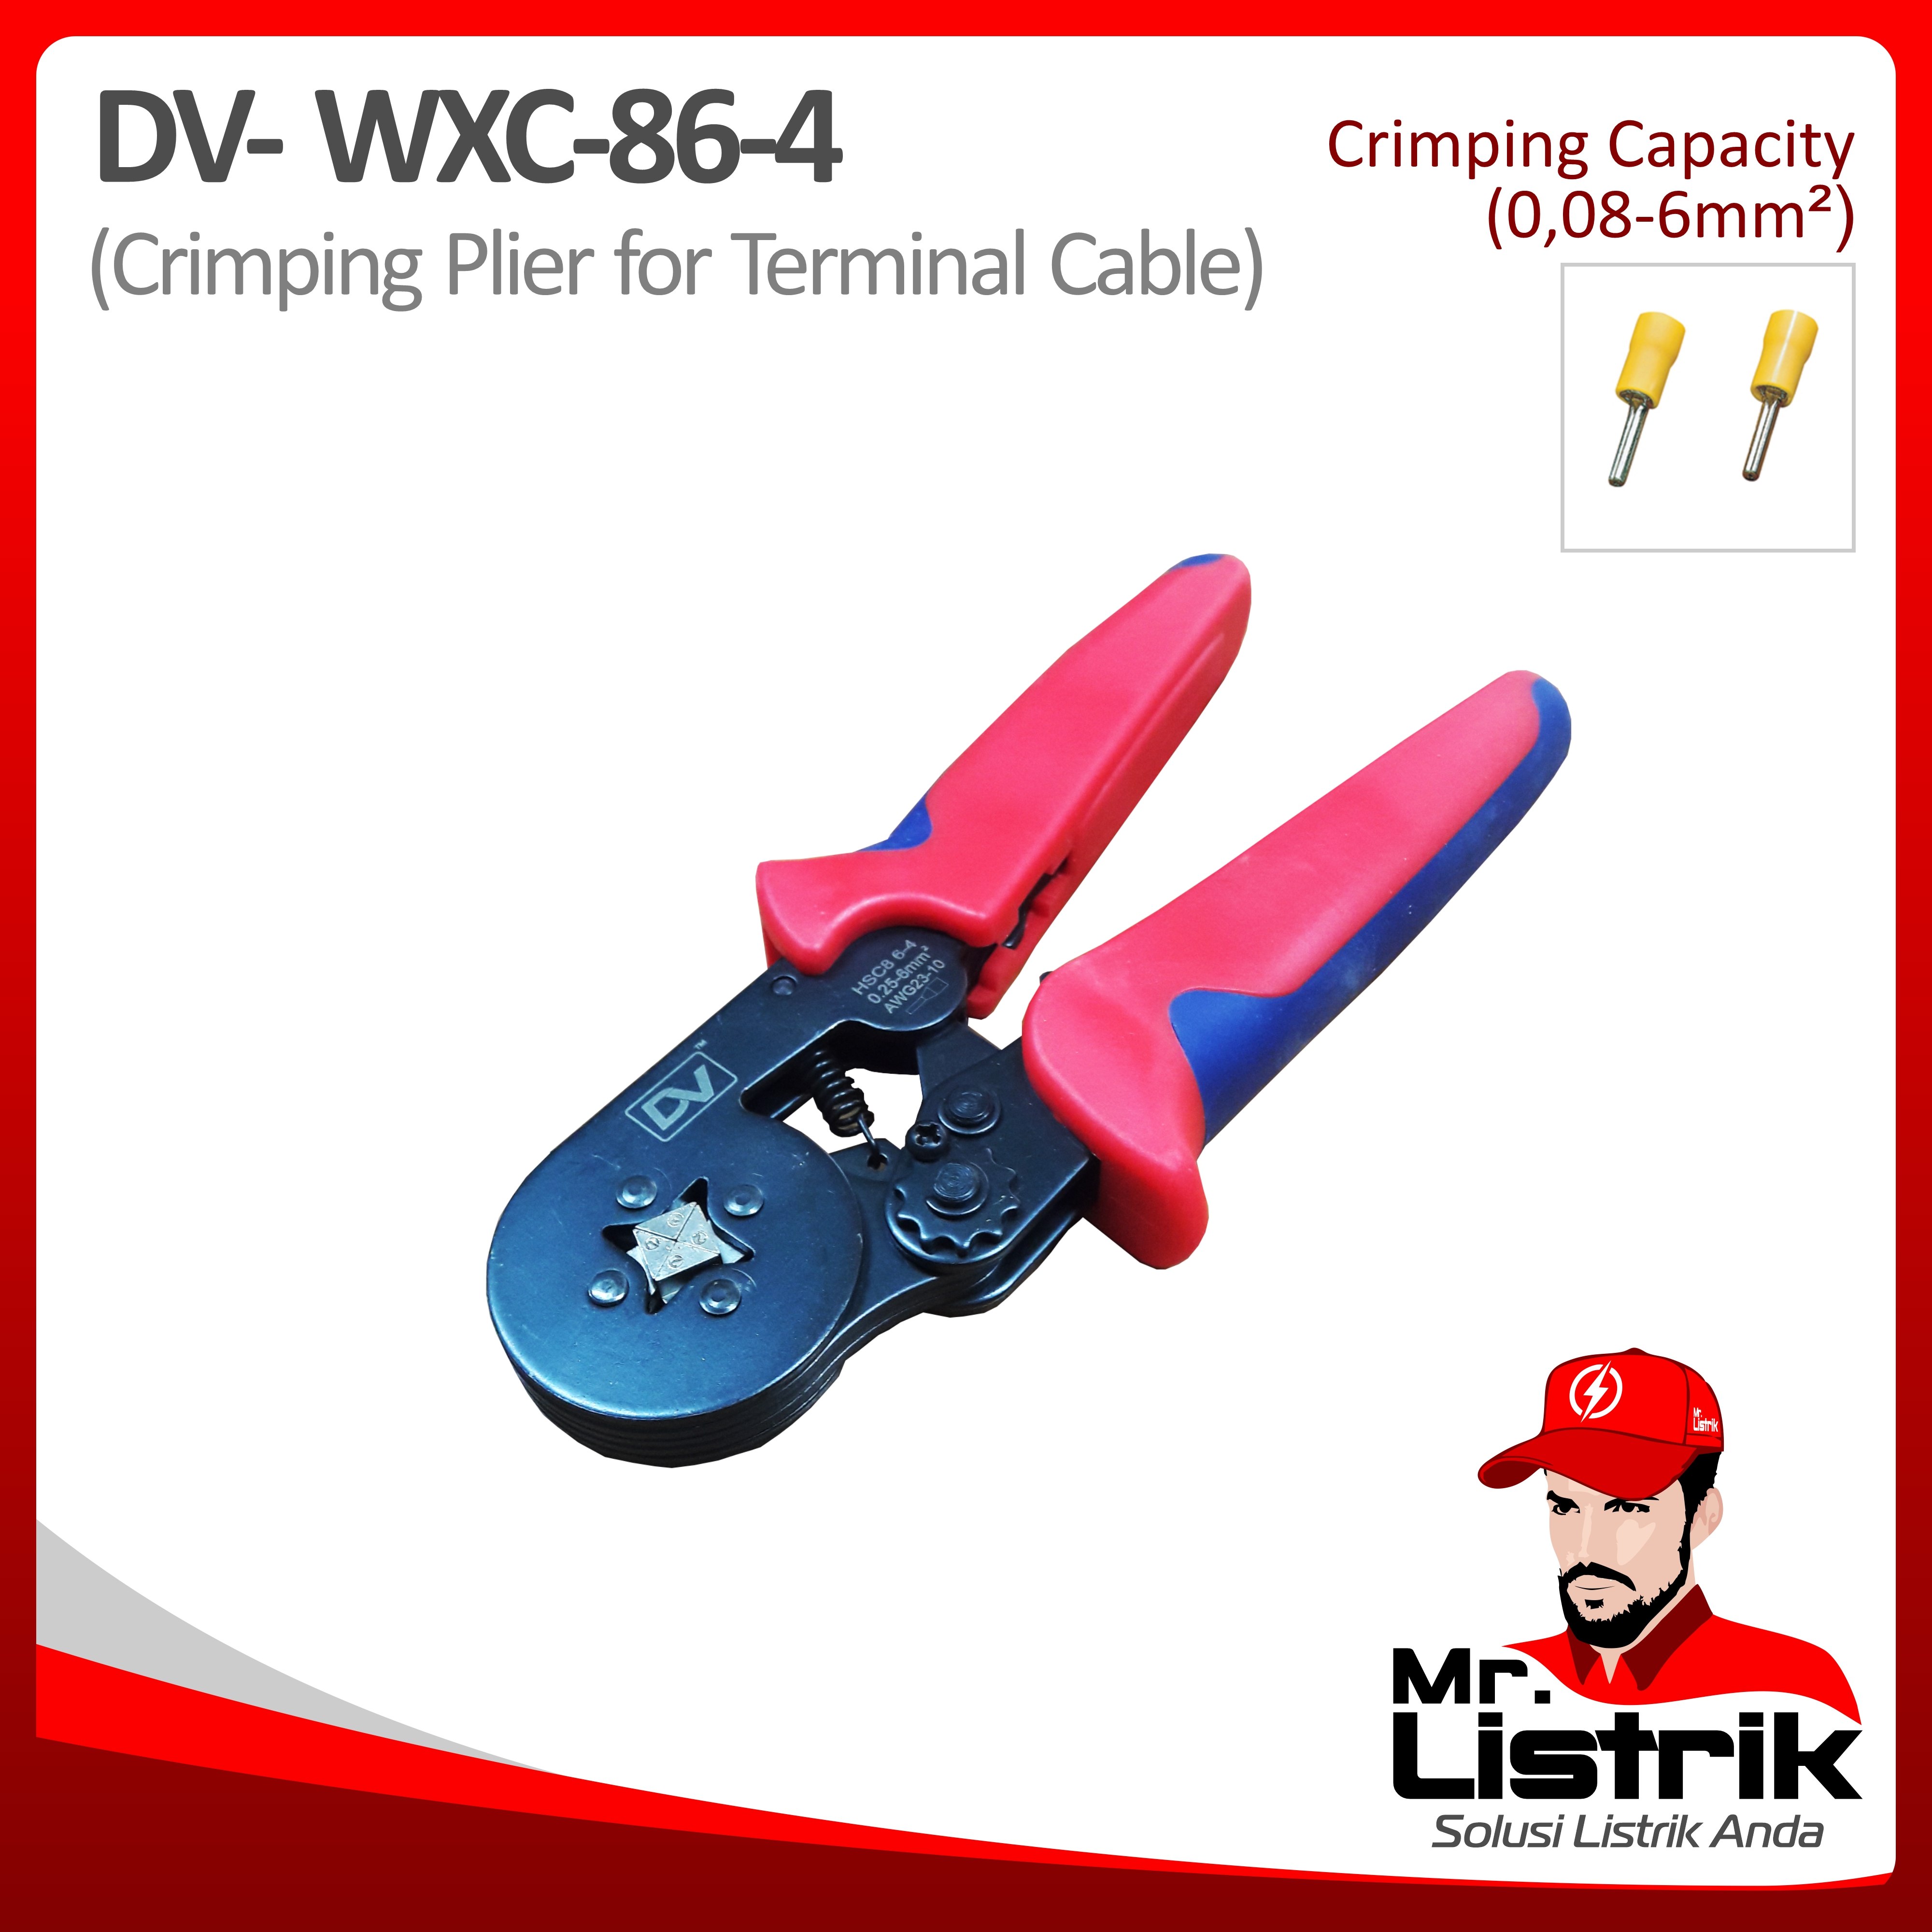 Crimping Tool For Skun 0.08-6mm DV WXC86-4